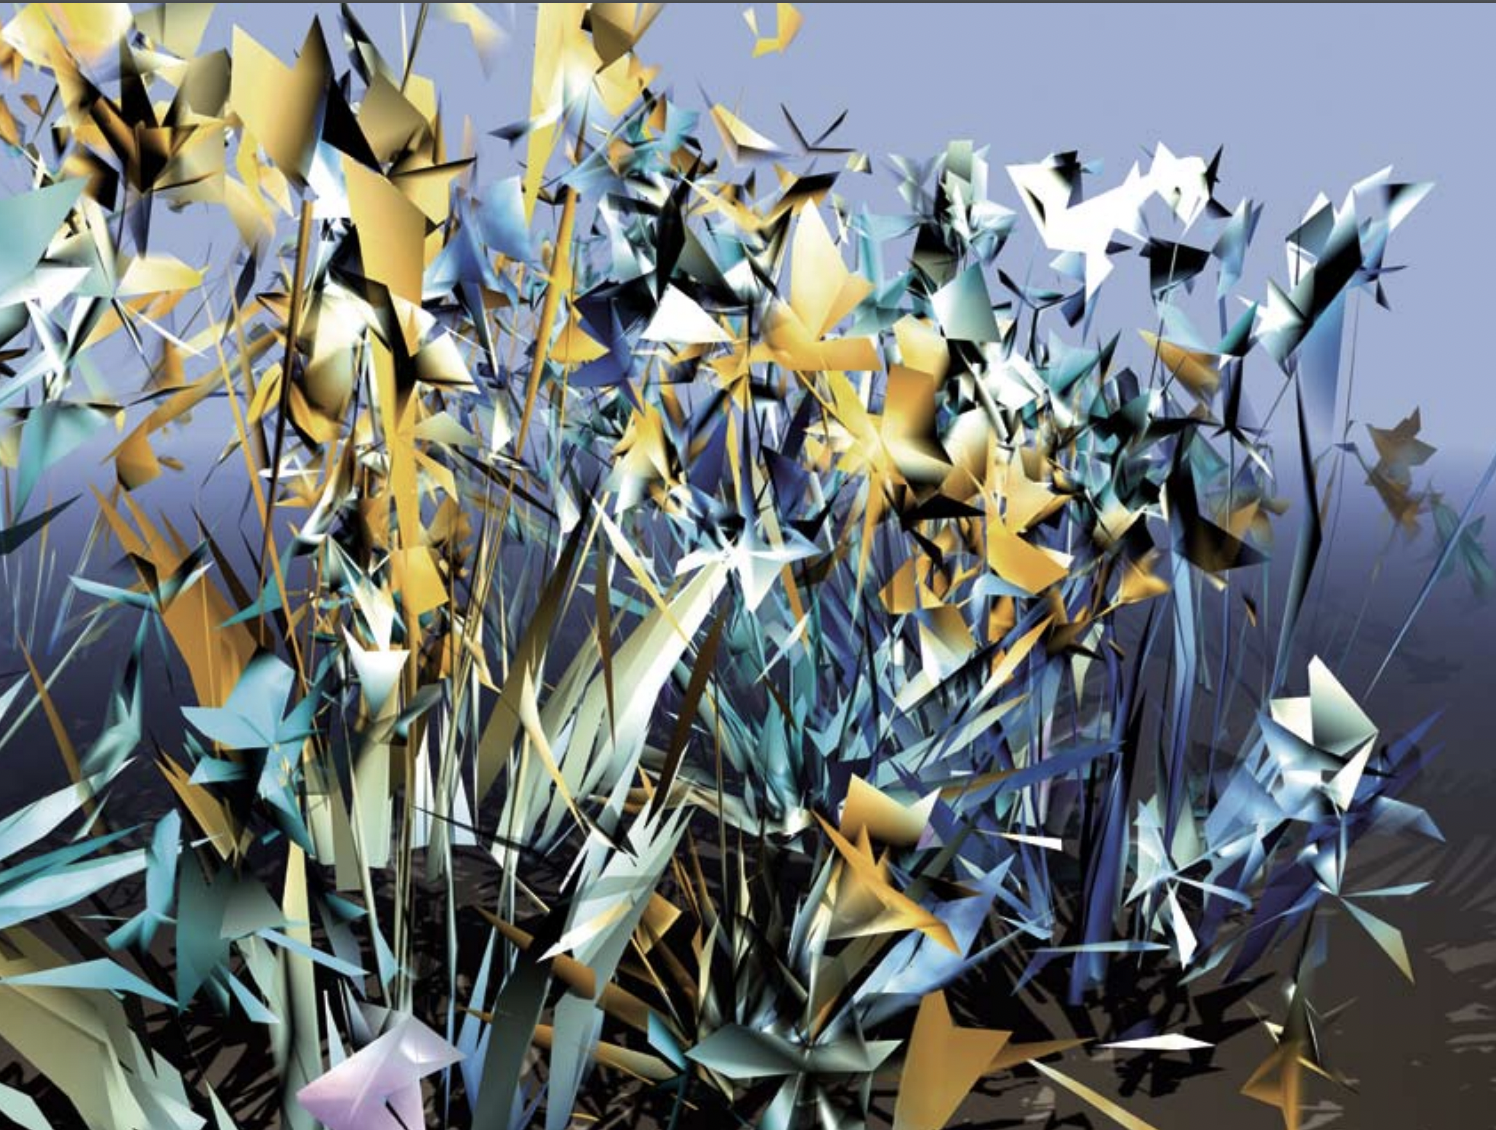 Origami Flowers Frame 89, 2005 / Image © Charles Csuri